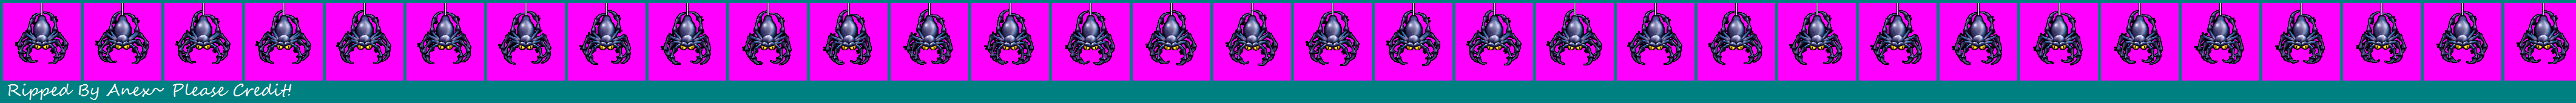 Egg Mania: Eggstreme Madness - Spider